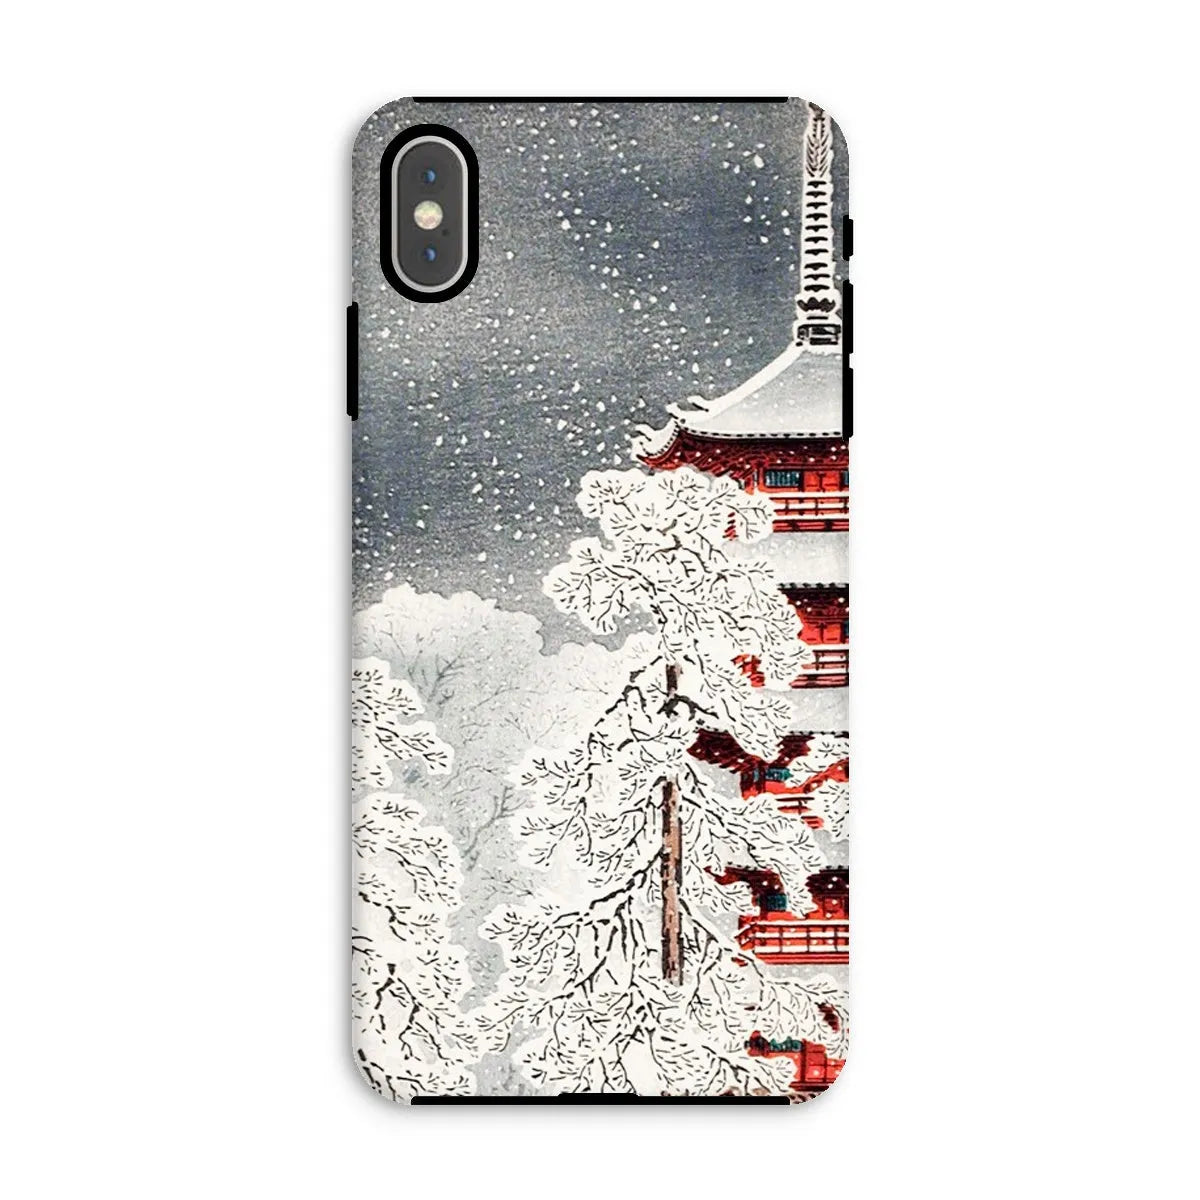 Snow At Asakusa - Shin-hanga Phone Case - Takahashi Shōtei - Iphone Xs Max / Matte - Mobile Phone Cases - Aesthetic Art